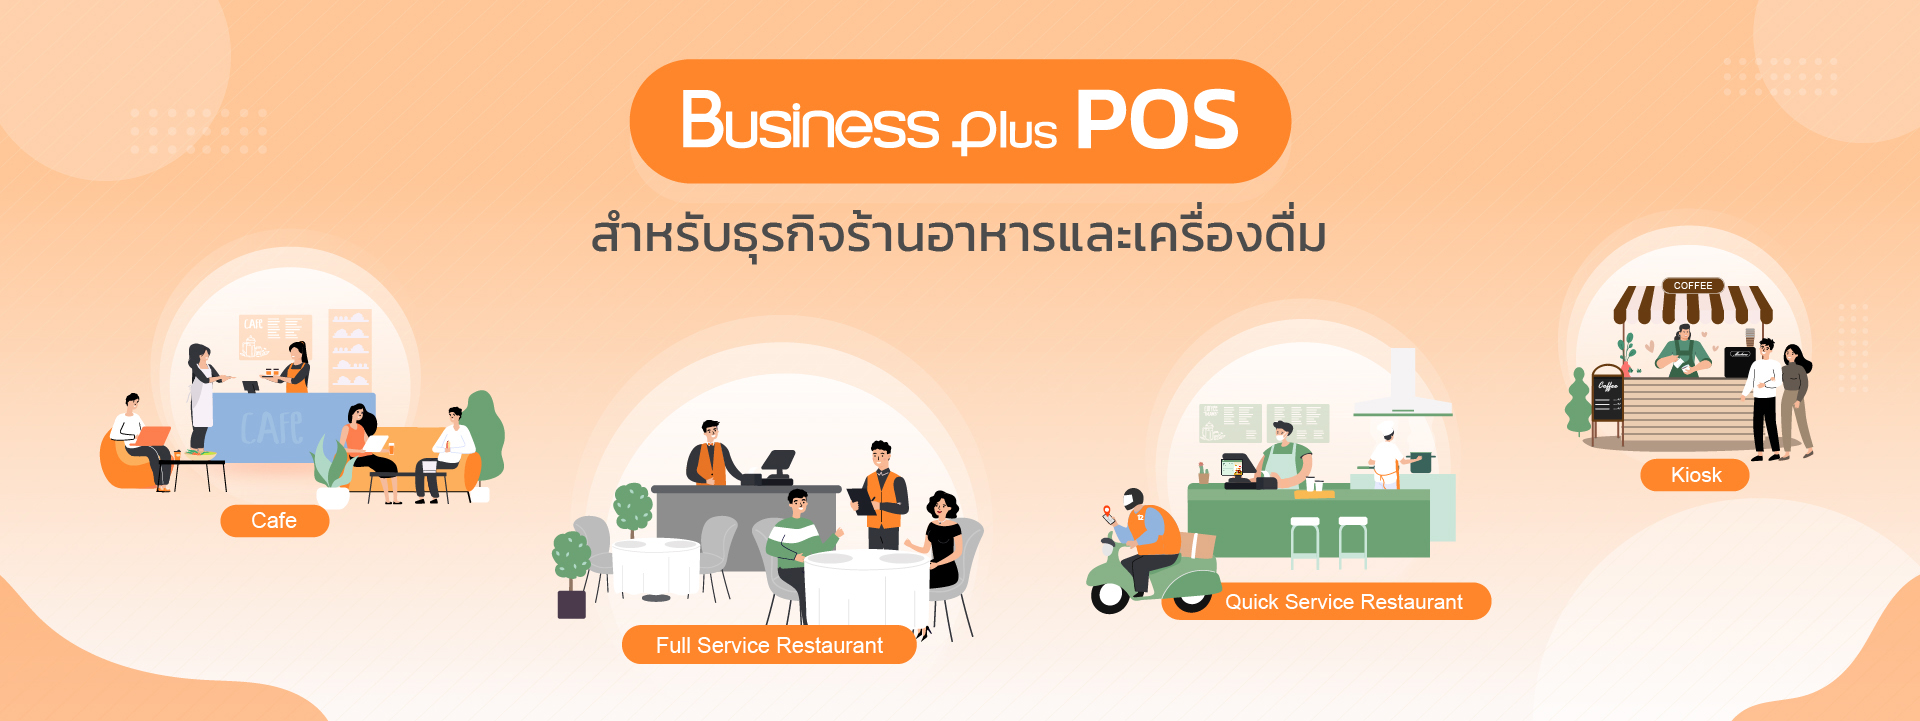 Banner Business Plus POS สำหรับธุรกิจร้านอาหารและเครื่องดื่ม.jpg